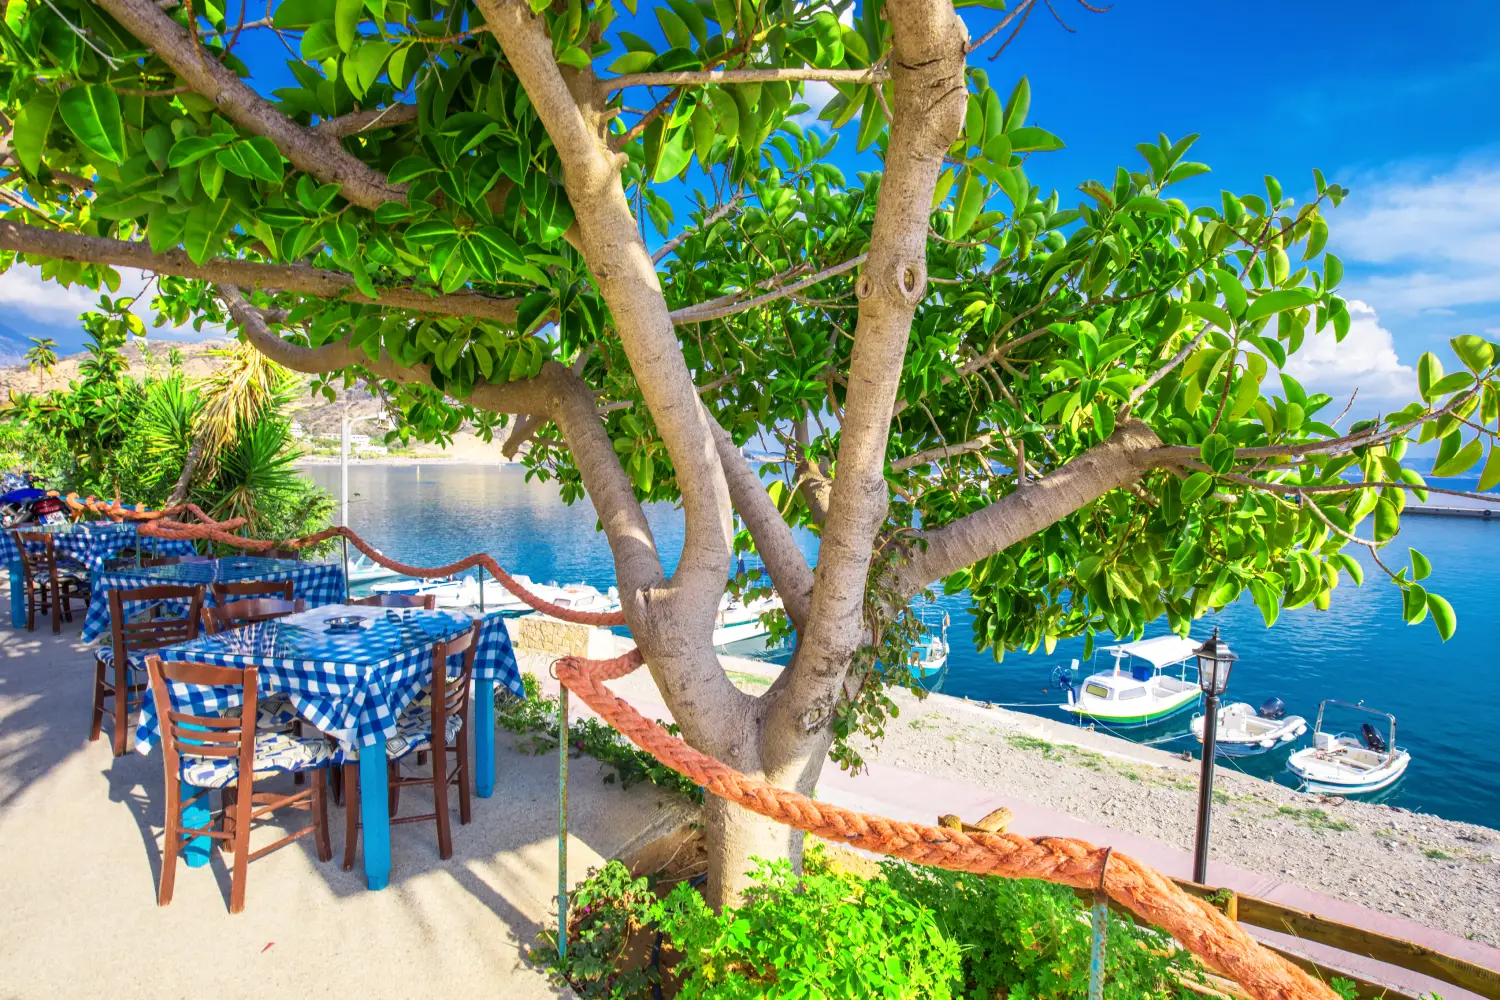 Ferry to Kasteli - Typical Greece restaurant on the beach, Creta, Greece, Europe.